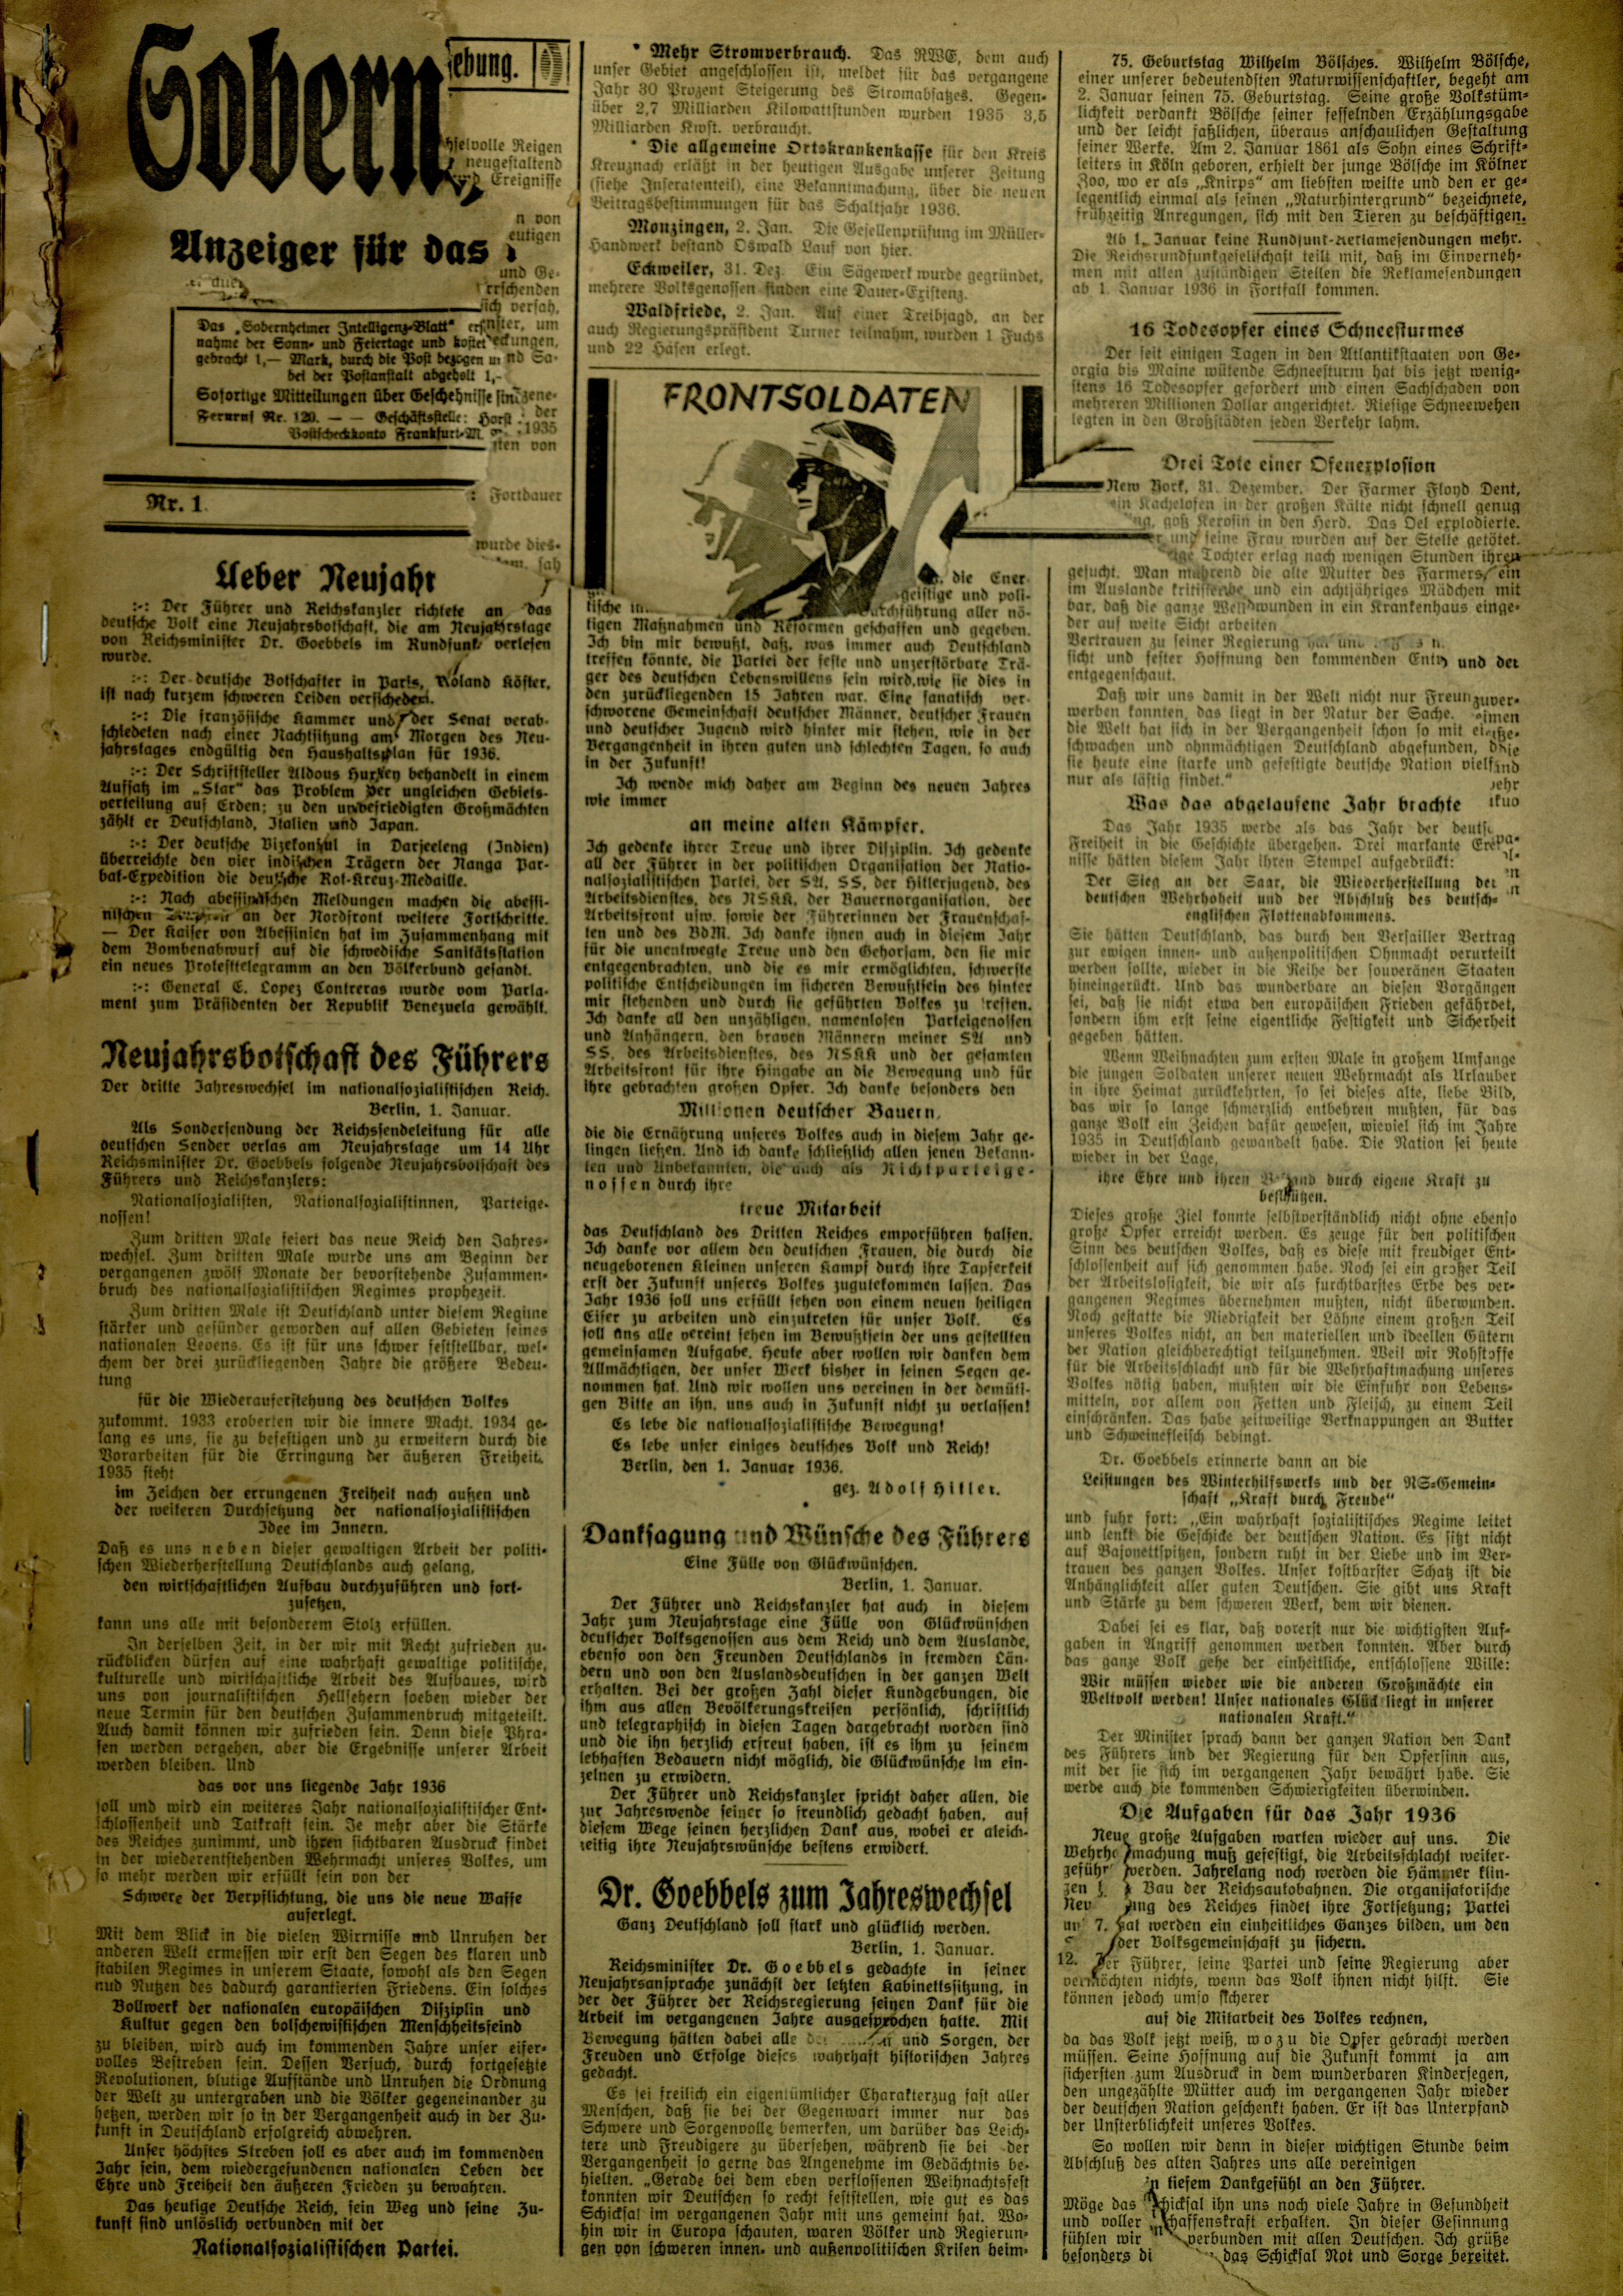 Zeitung: Sobernheimer Intelligenzblatt; Januar 1936 , Jg. 87, Nr. 1 (Heimatmuseum Bad Sobernheim CC BY-NC-SA)